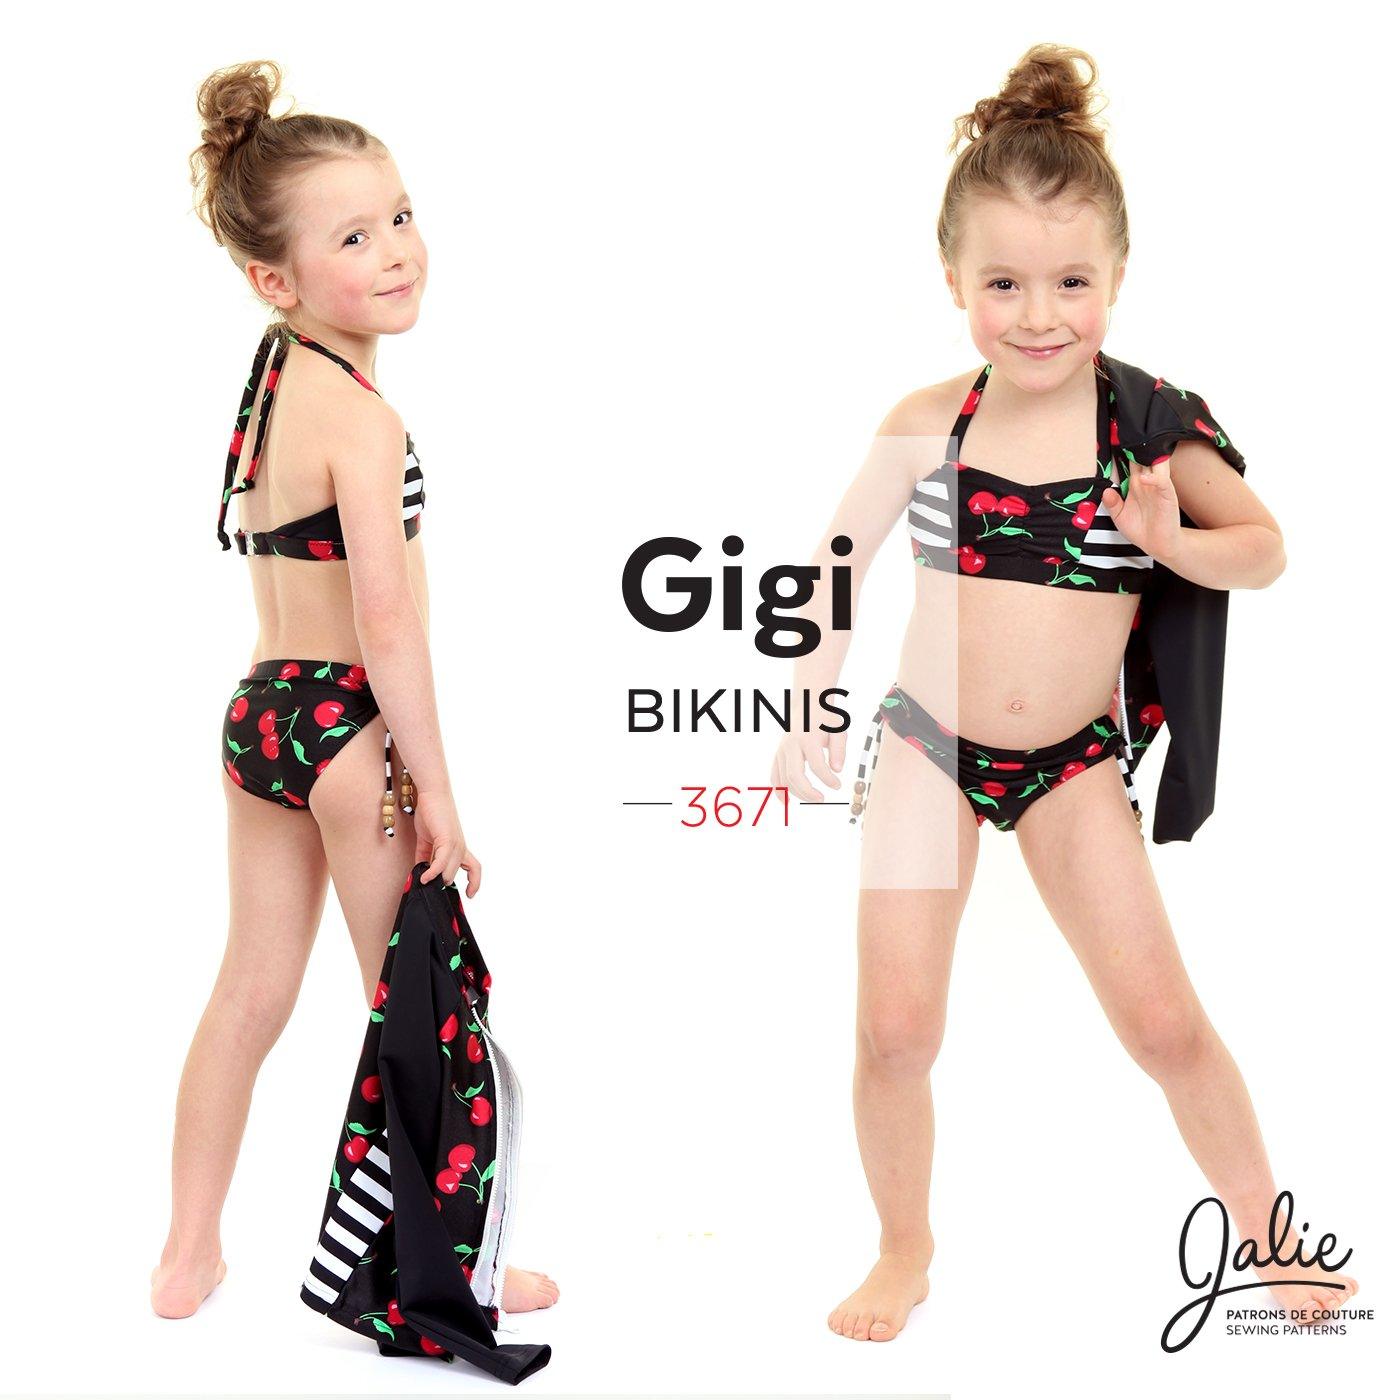 Jalie 3671 - GIGI - Bikini in size I (5)